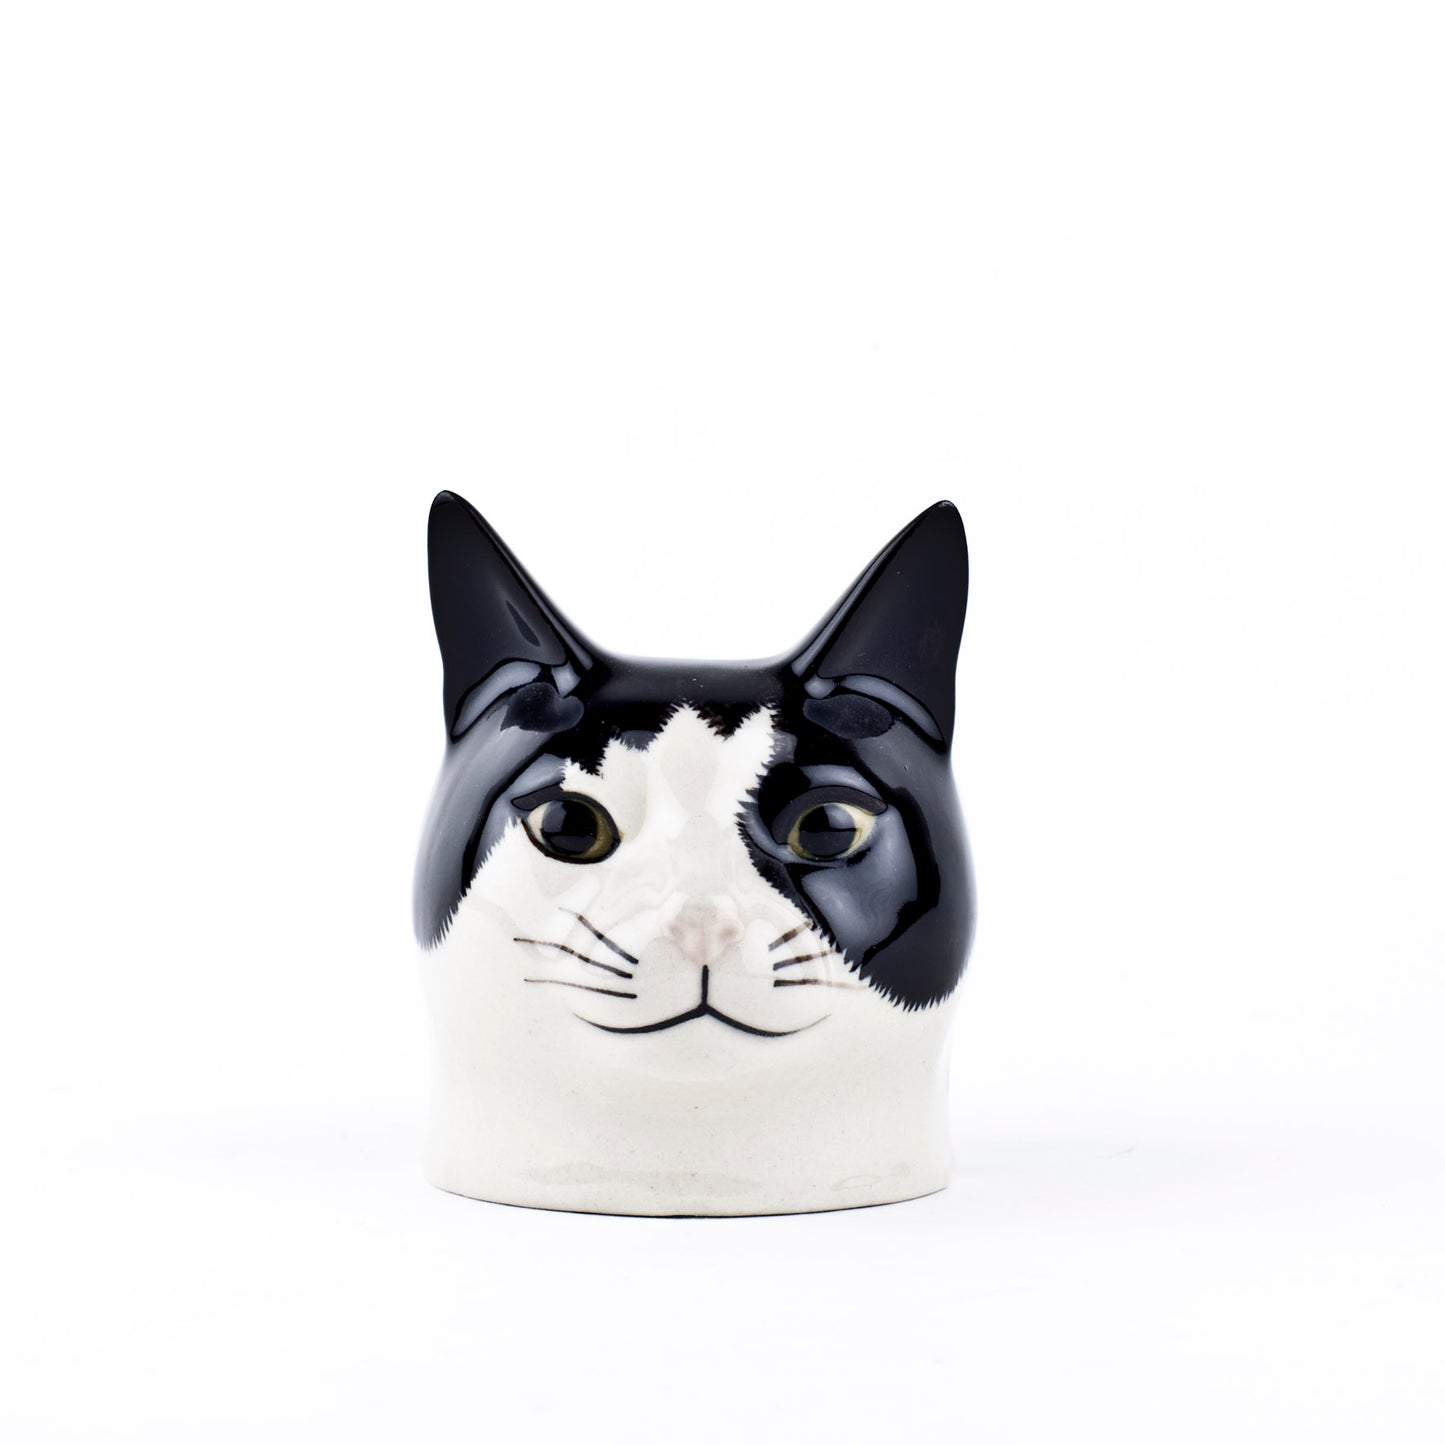 Egg Cup Cat Black/White - Quail